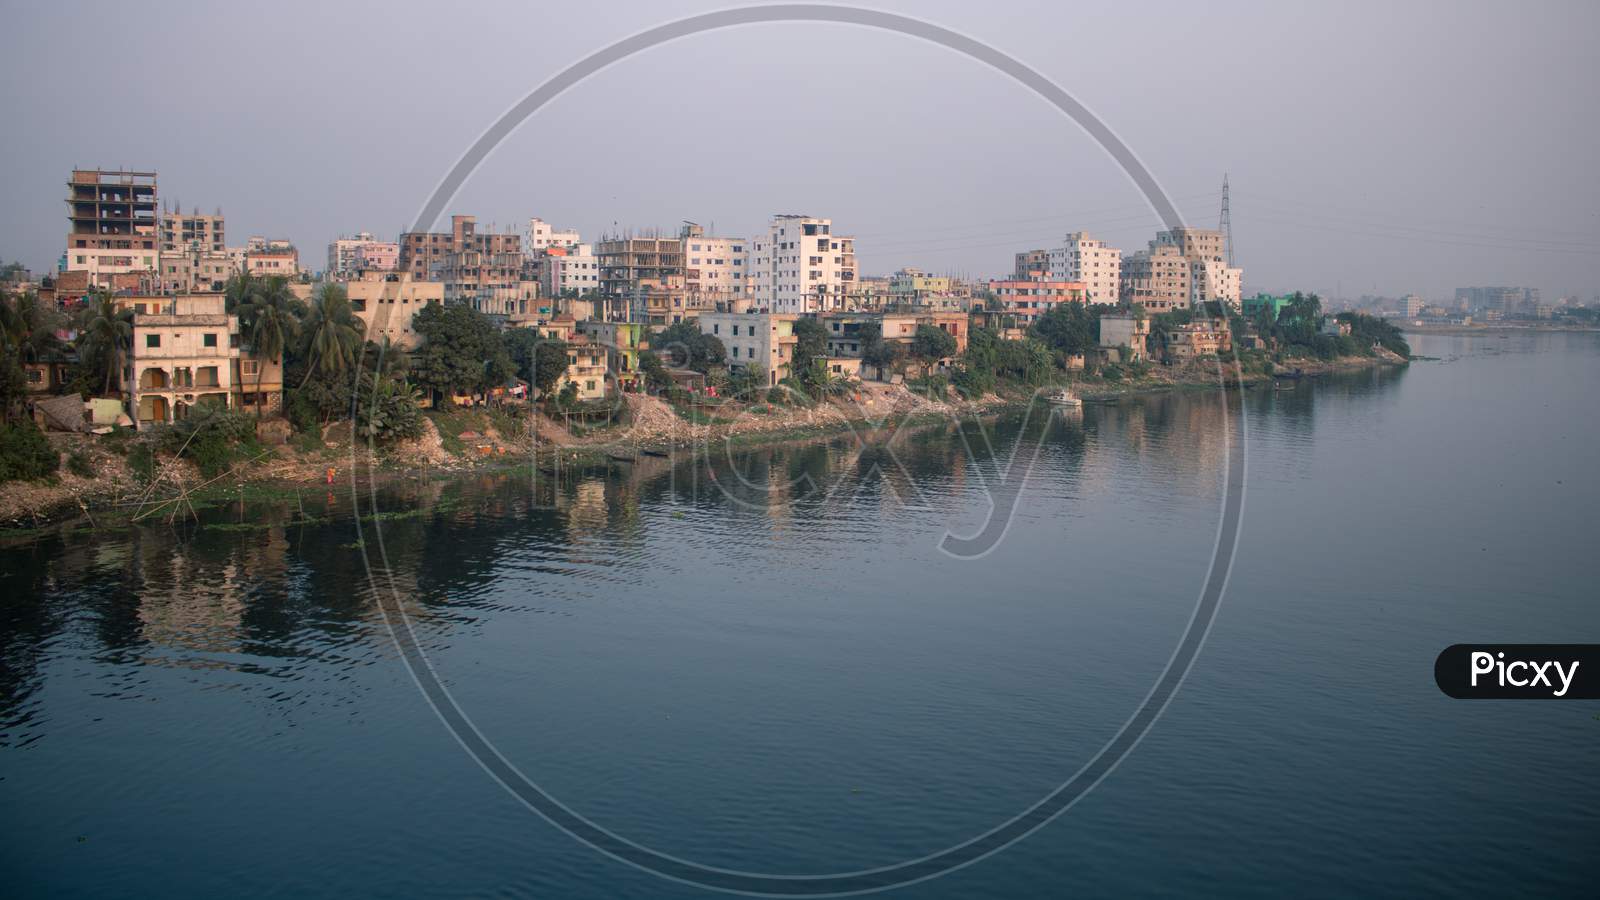 Picture Of One Side Of Dhaka City On The Banks Of River Buriganga.The River Buriganga Has Enhanced The Beauty Of The Capital City Dhaka.